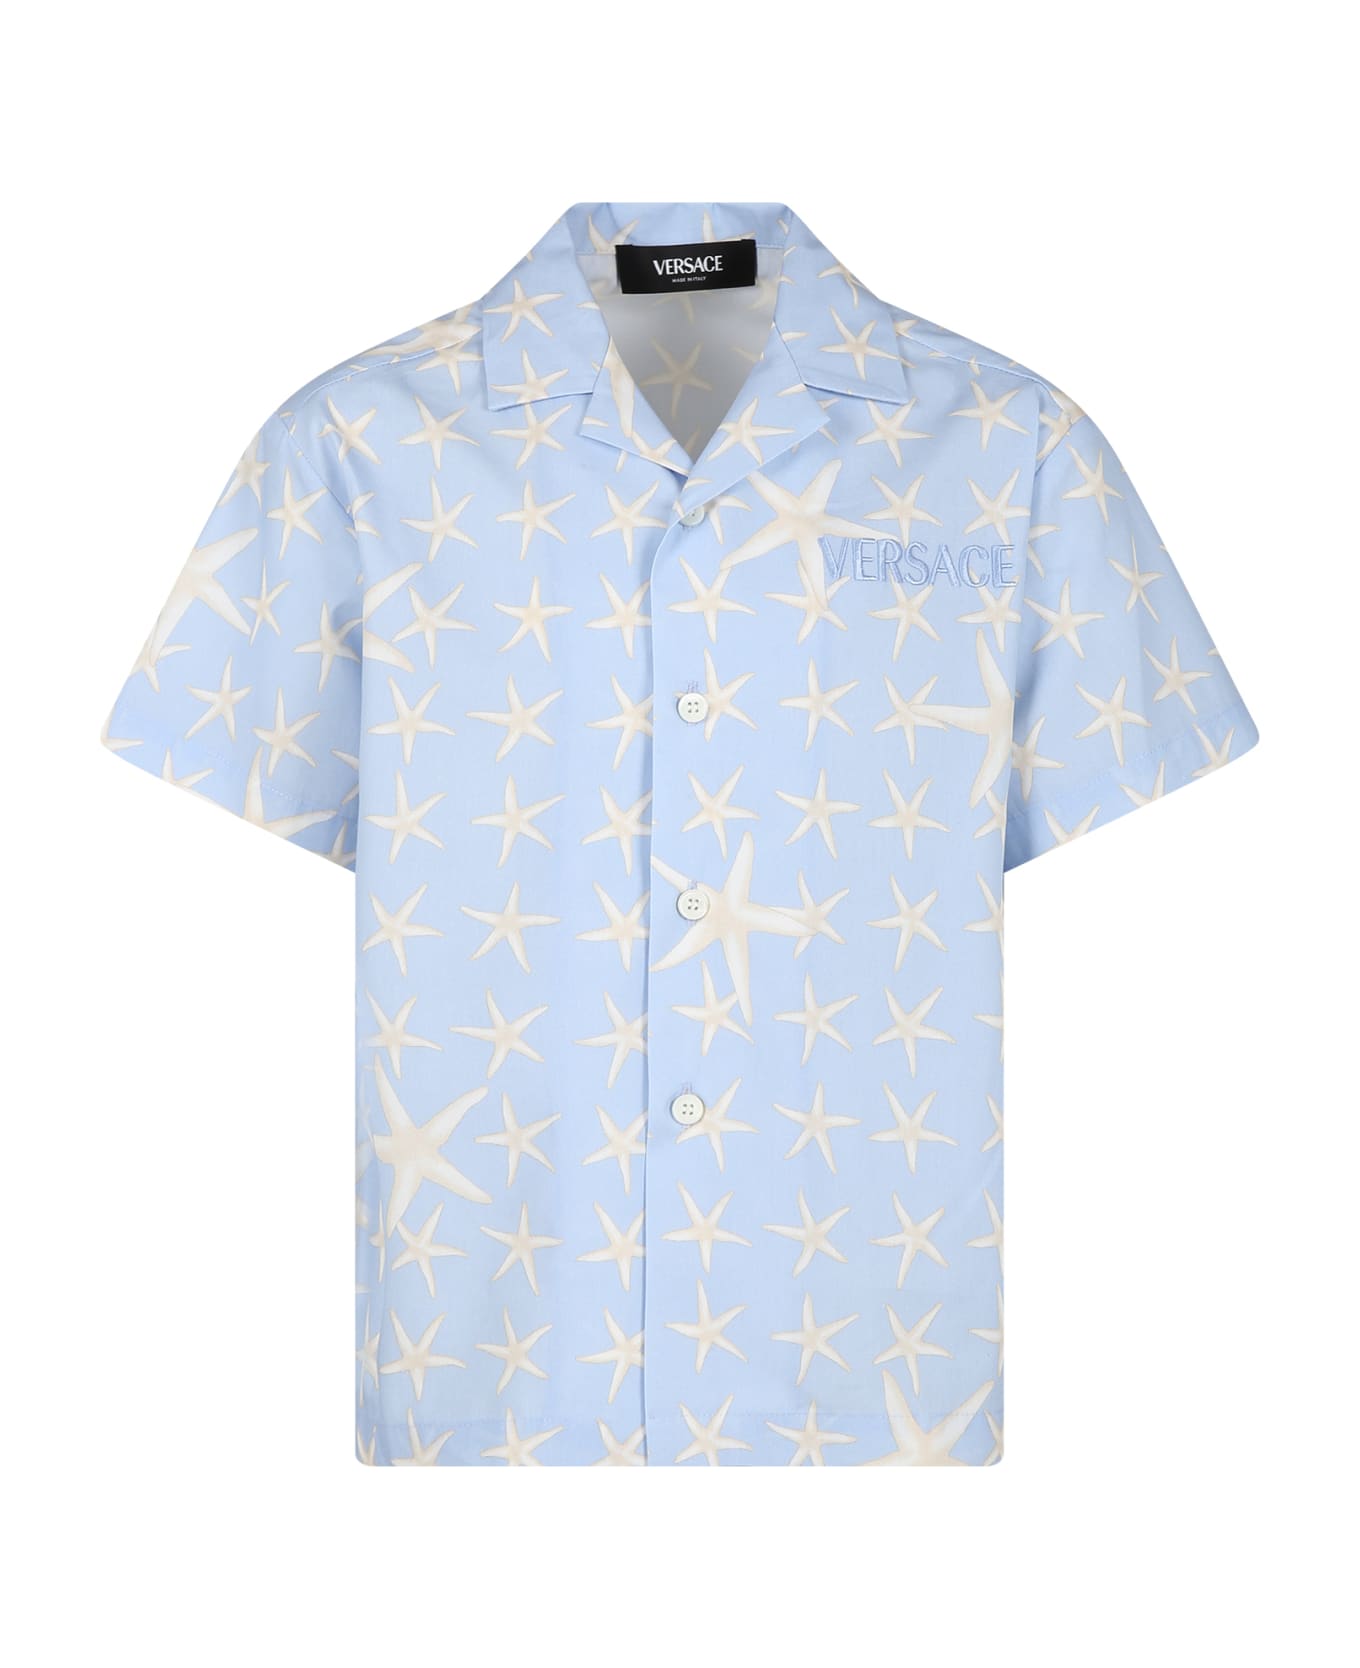 Versace Light Blue Shirt For Boy With Sea Shells Print - Light Blue